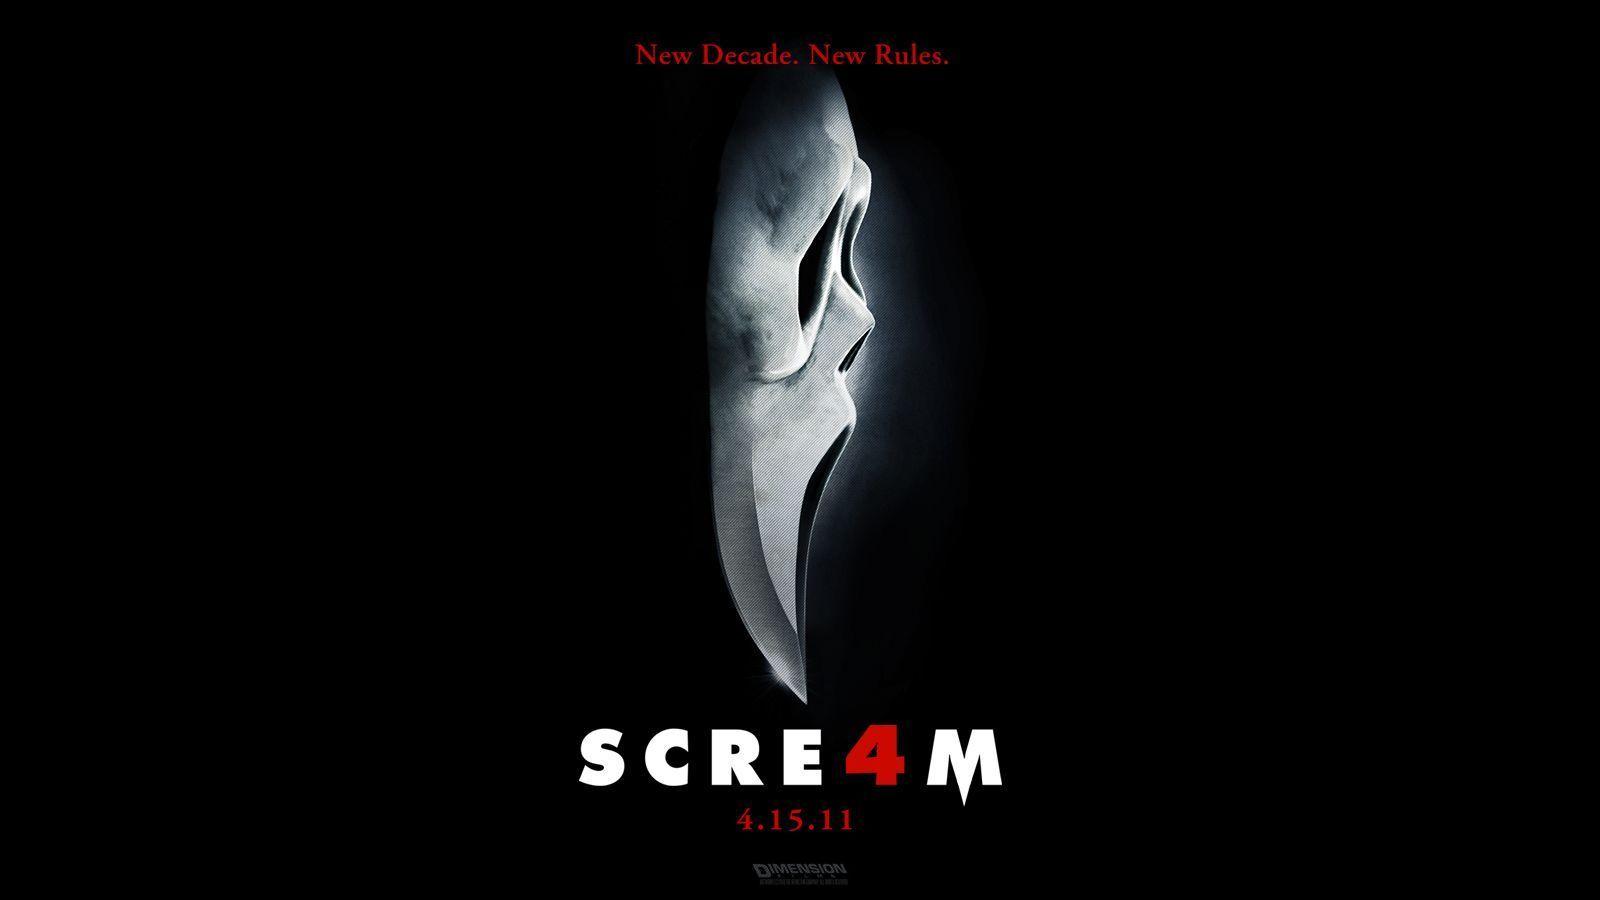 Scream 4 Wallpaper. Scream 4 Background